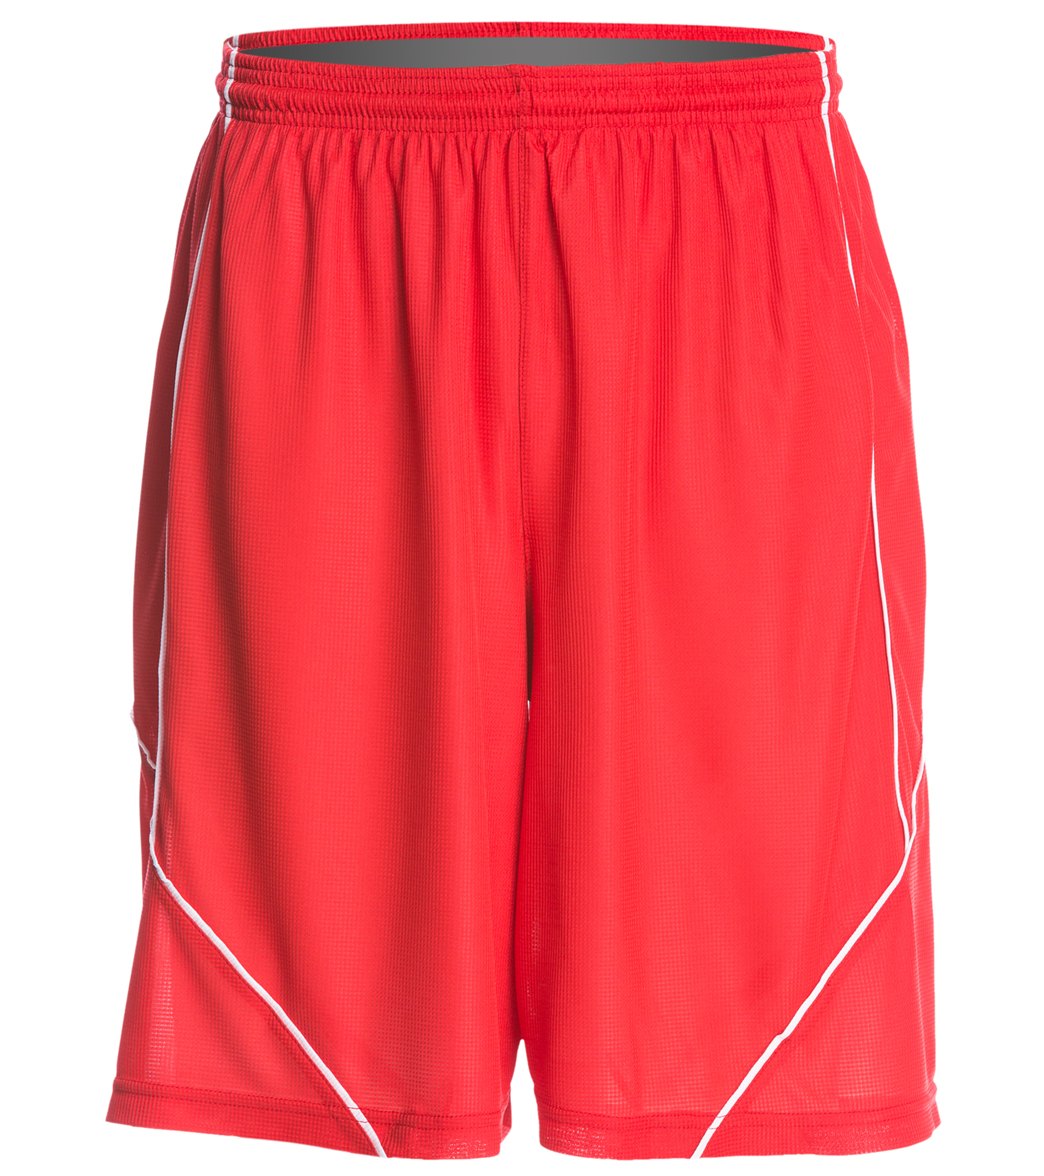 Men's Mesh Short - True Red Small Polyester - Swimoutlet.com